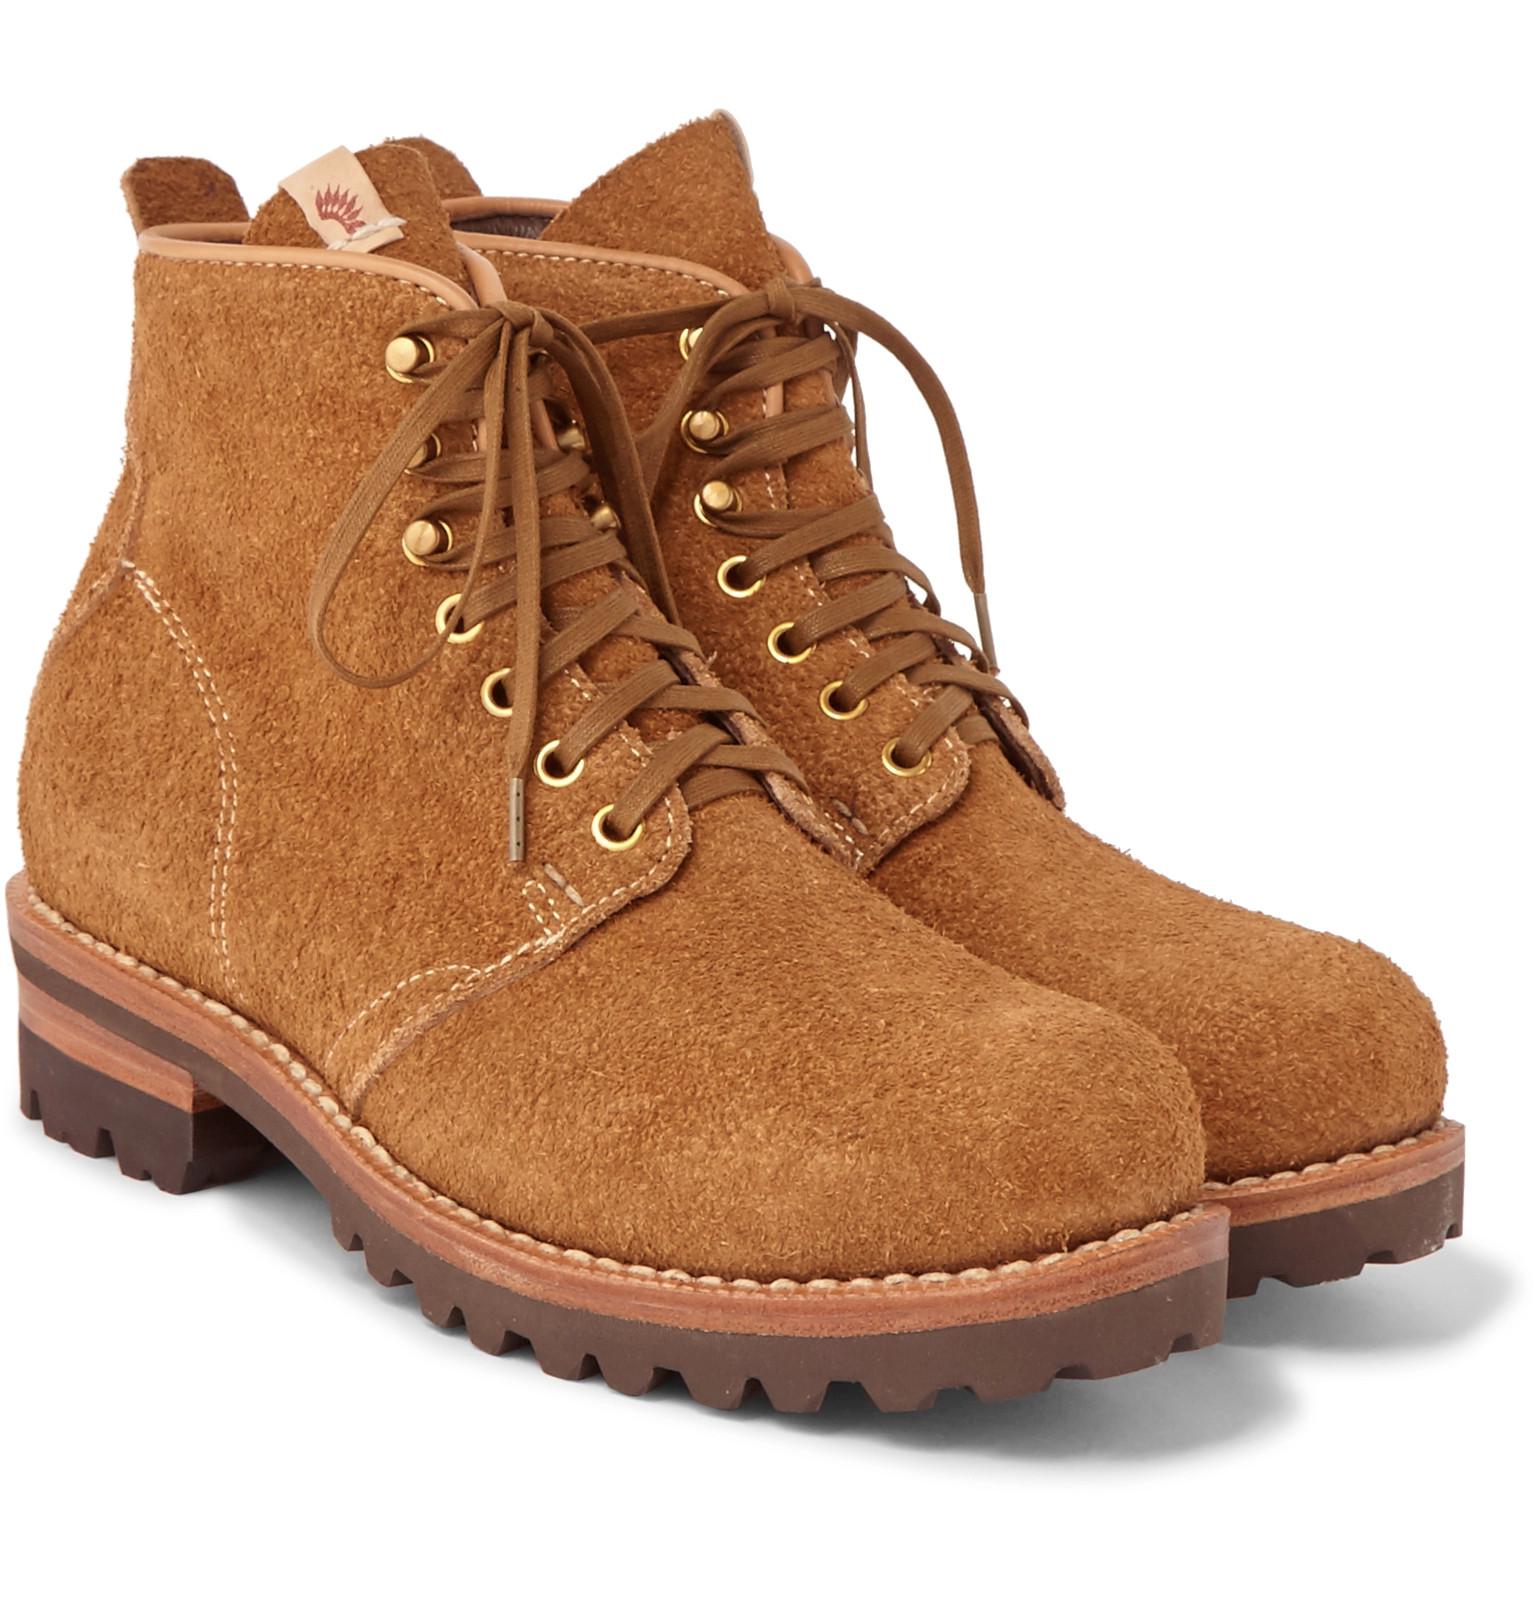 Visvim Zermatt Rough-out Leather Boots in Tan (Brown) for Men - Lyst